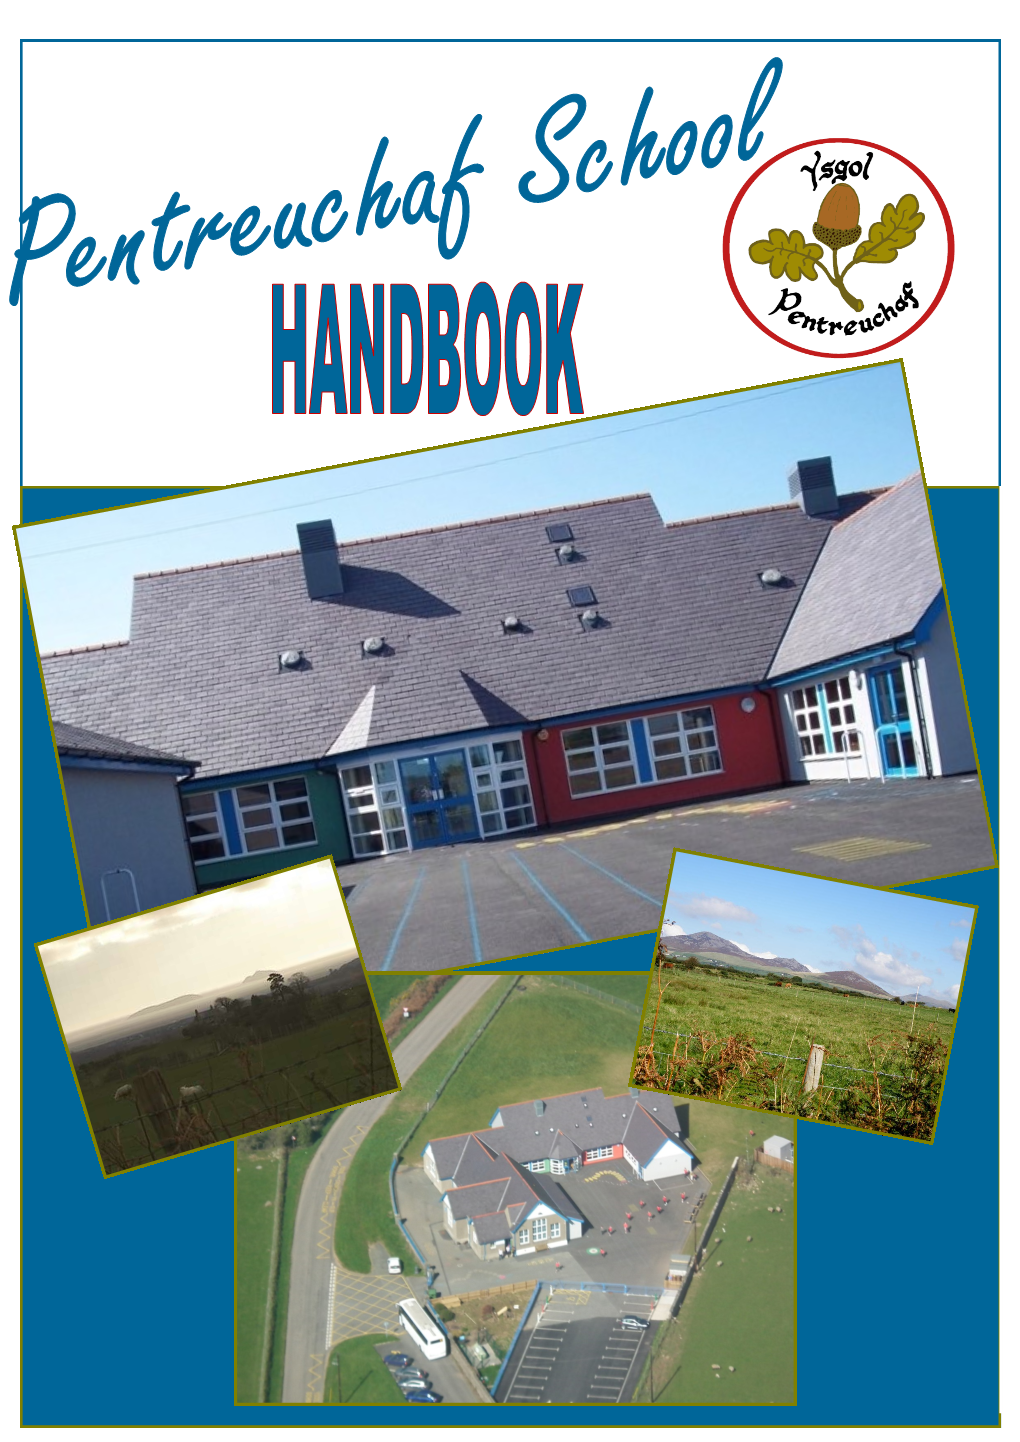 Pentreuchaf School Handbook (Reviewed June 2013)